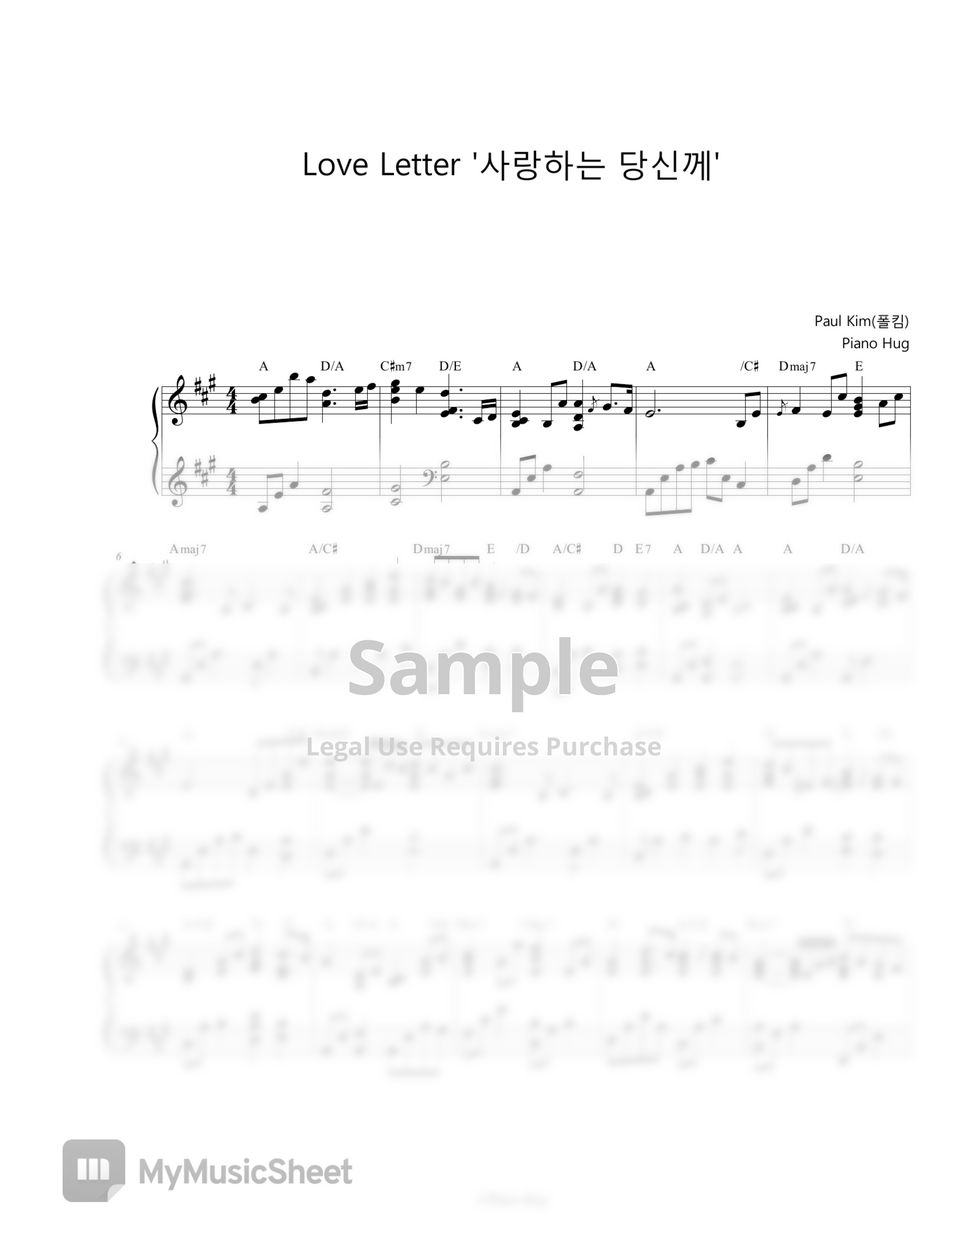 Paul Kim (폴킴) - Love Letter (사랑하는 당신께) by Piano Hug